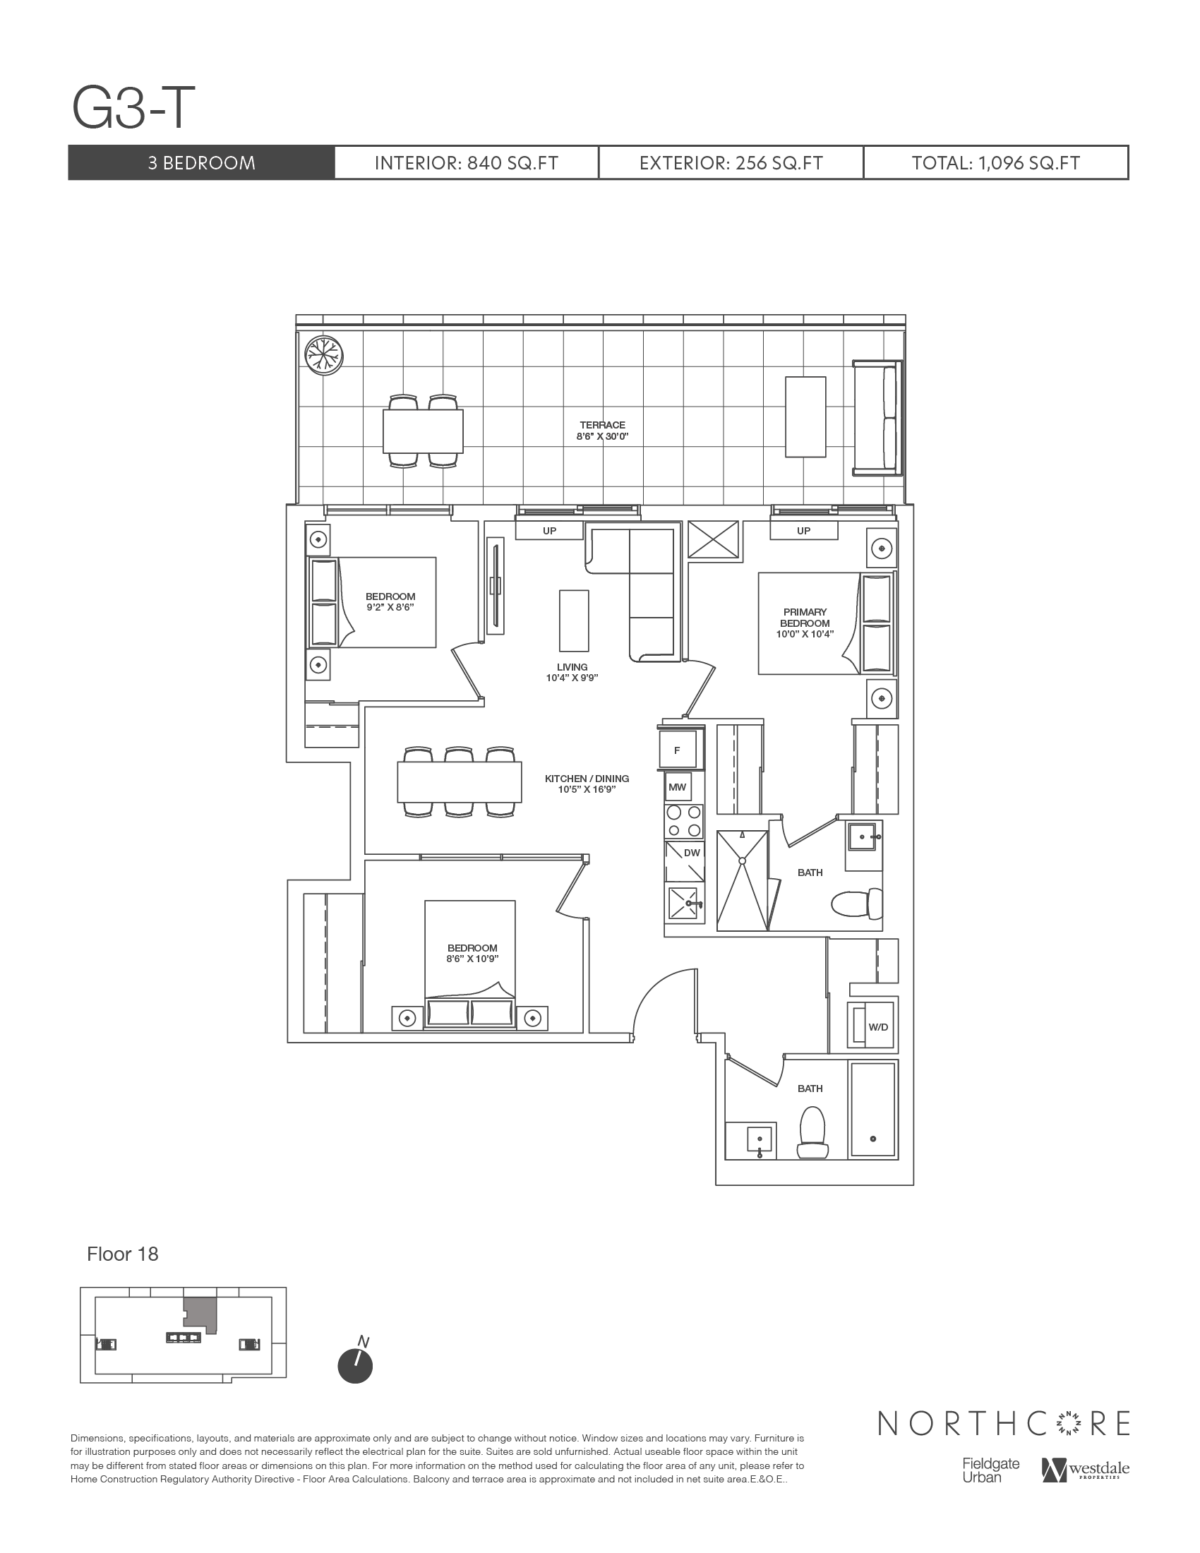 G3-T floorplan